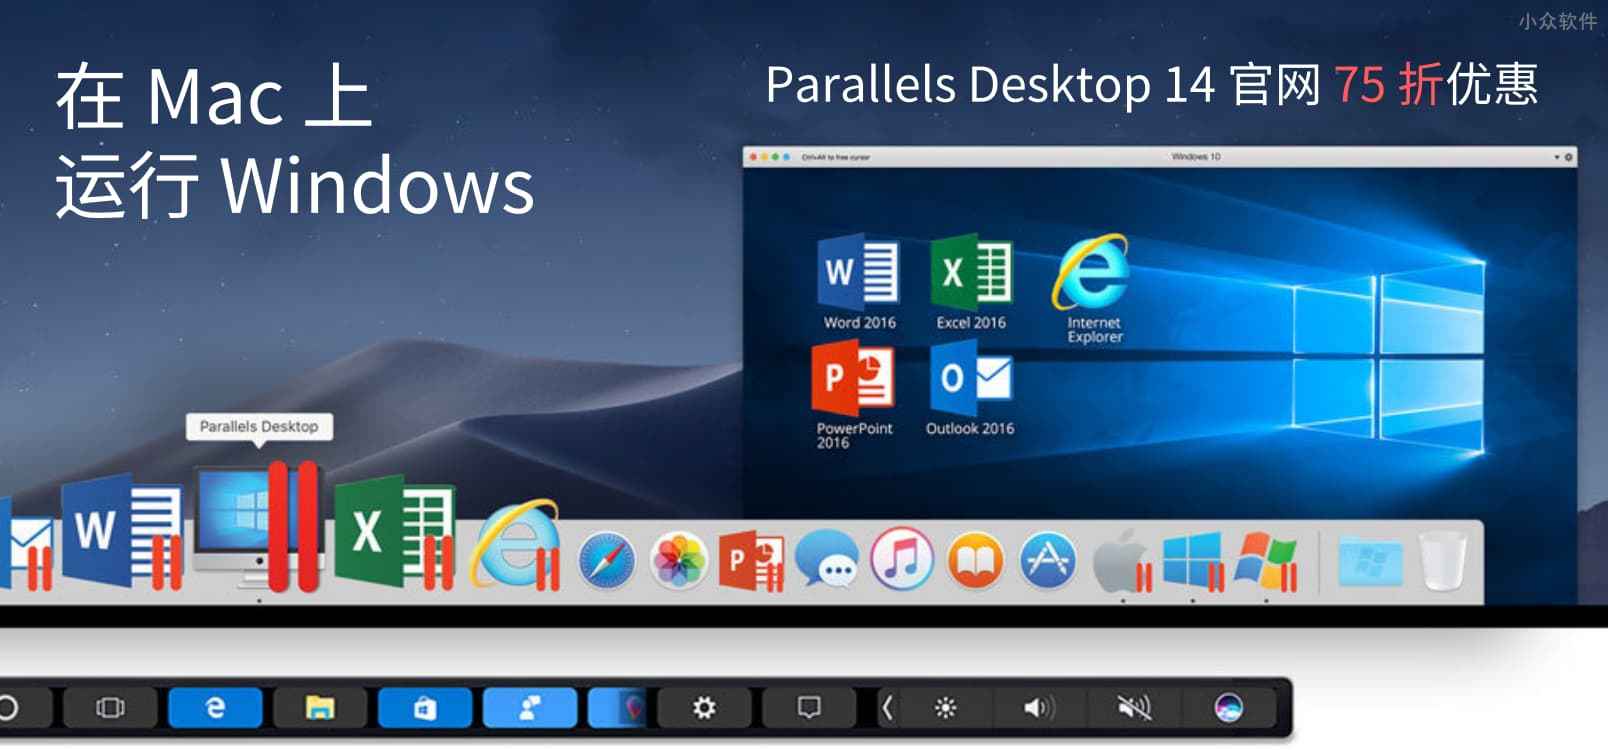 Parallels Desktop 14 官网 75 折优惠，在 Mac 上轻松运行 Windows